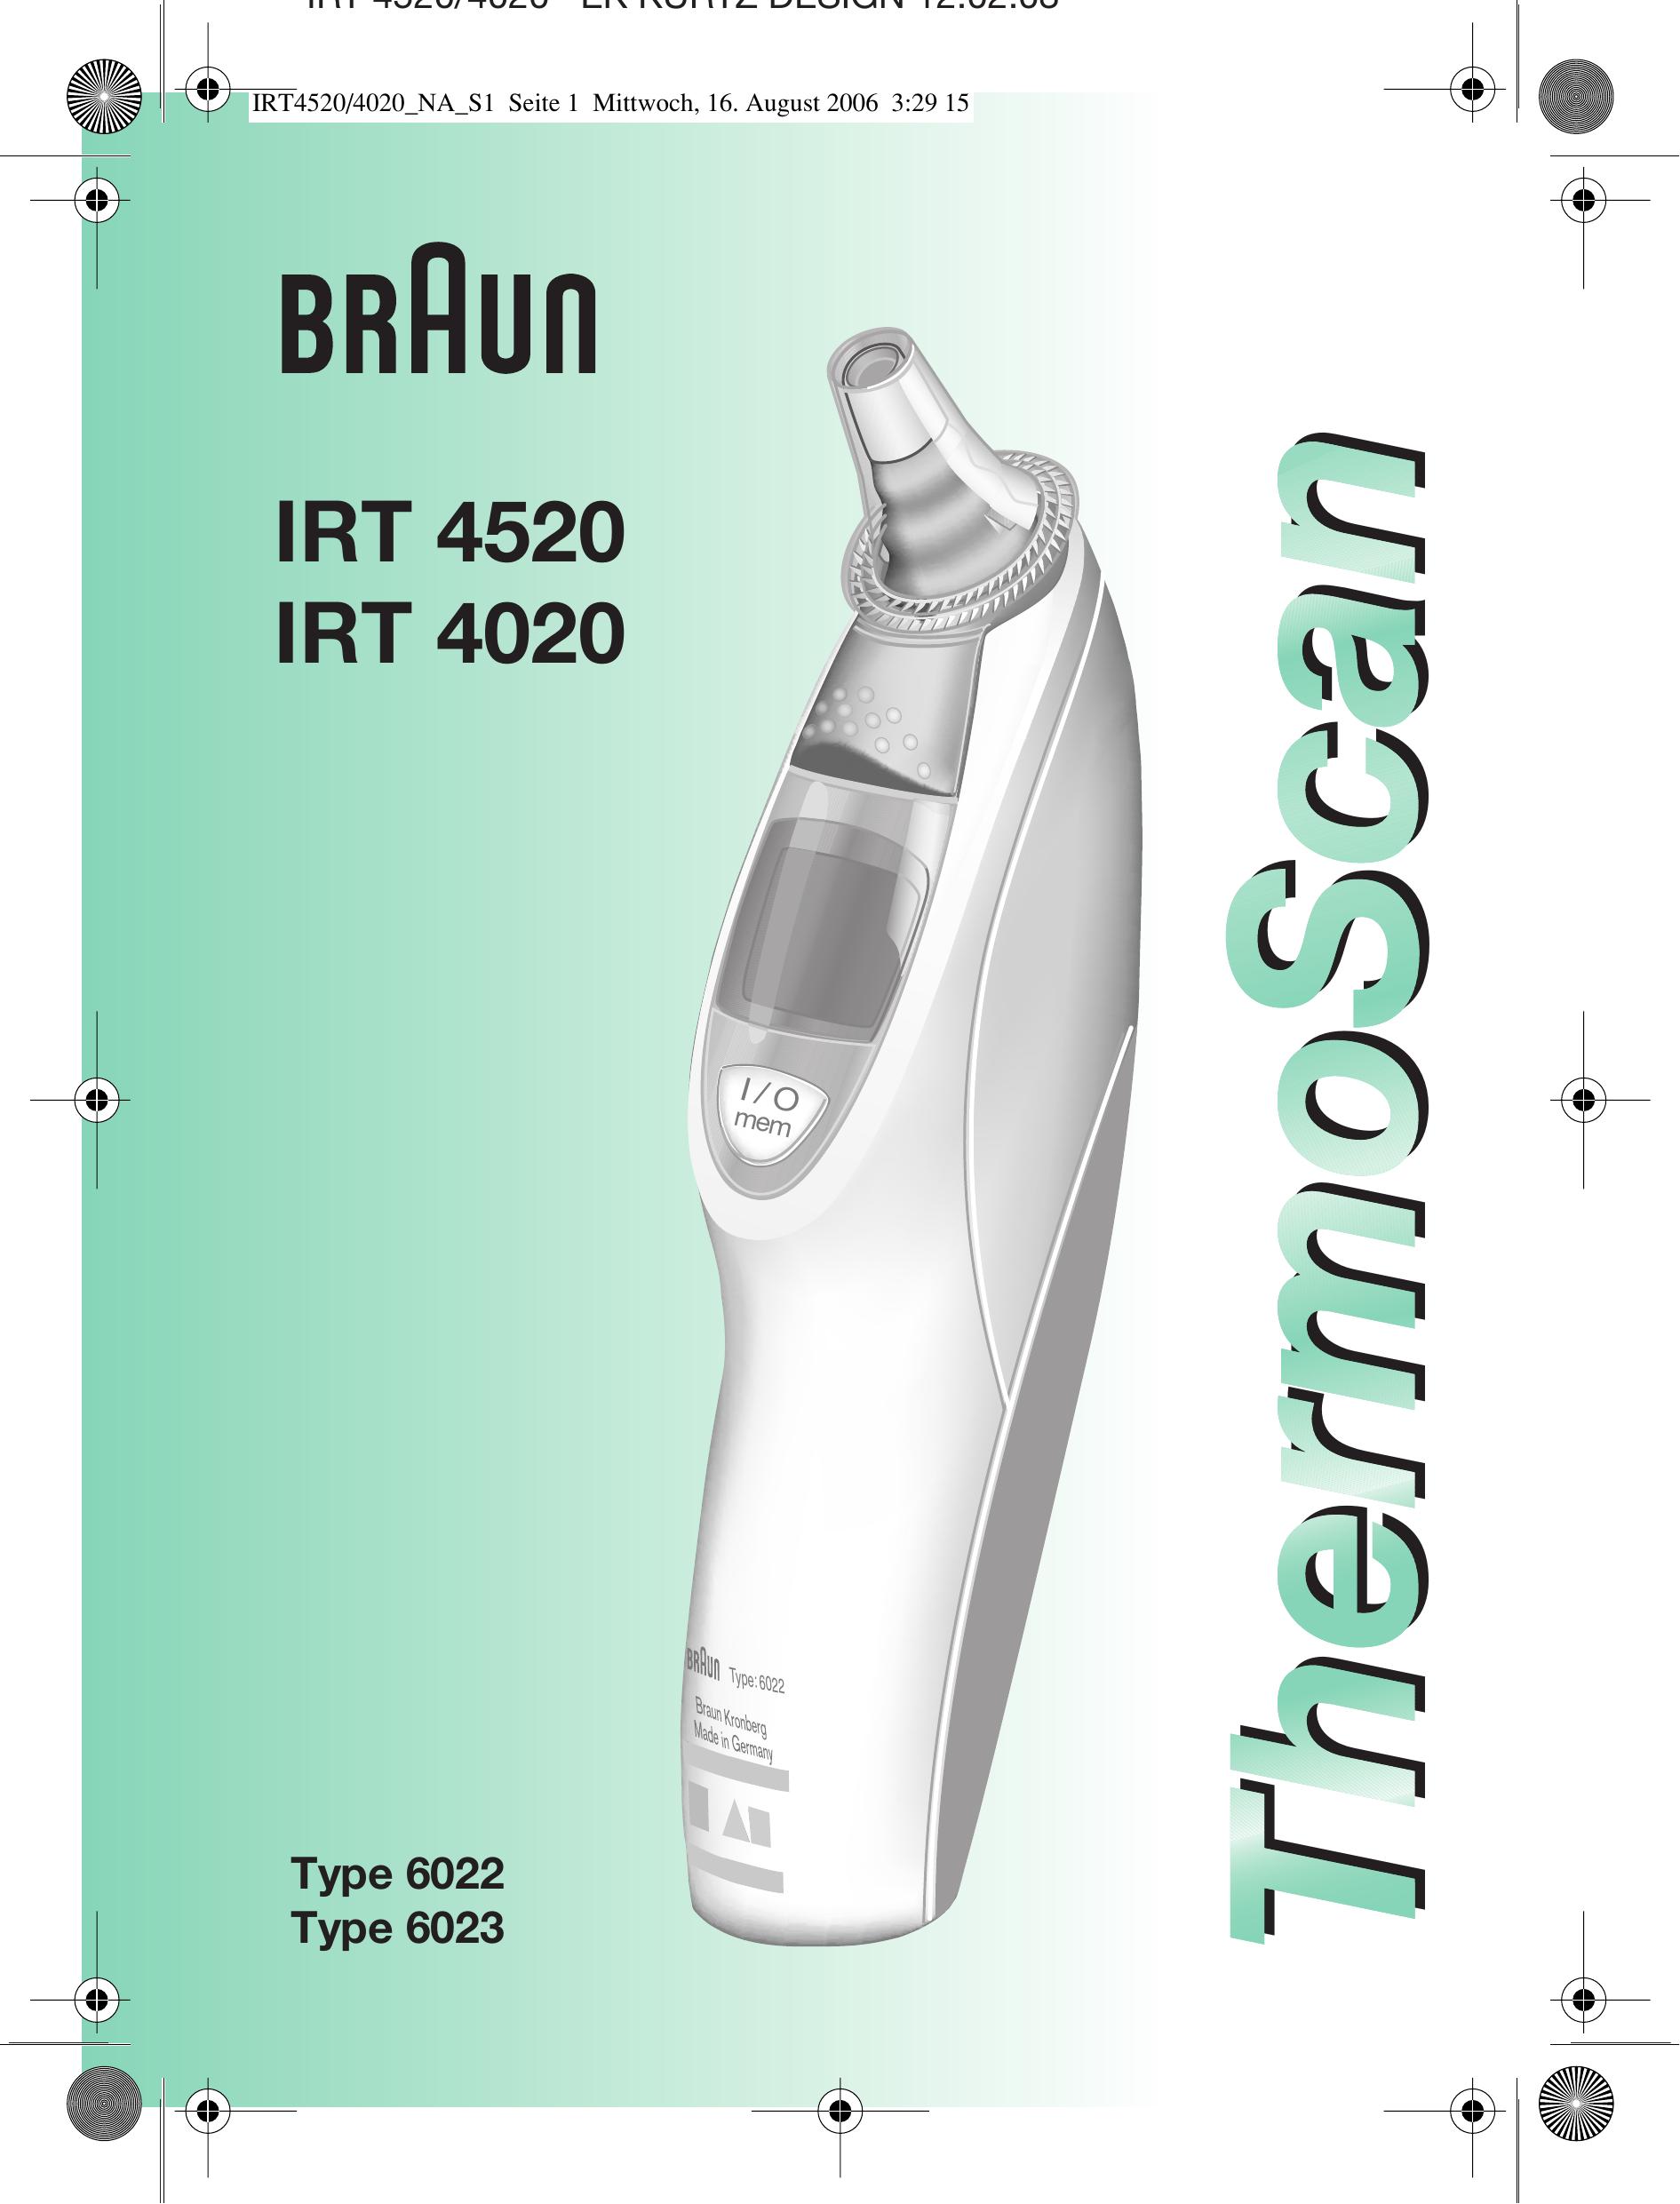 Braun IRT4520USSM Thermometer User Manual